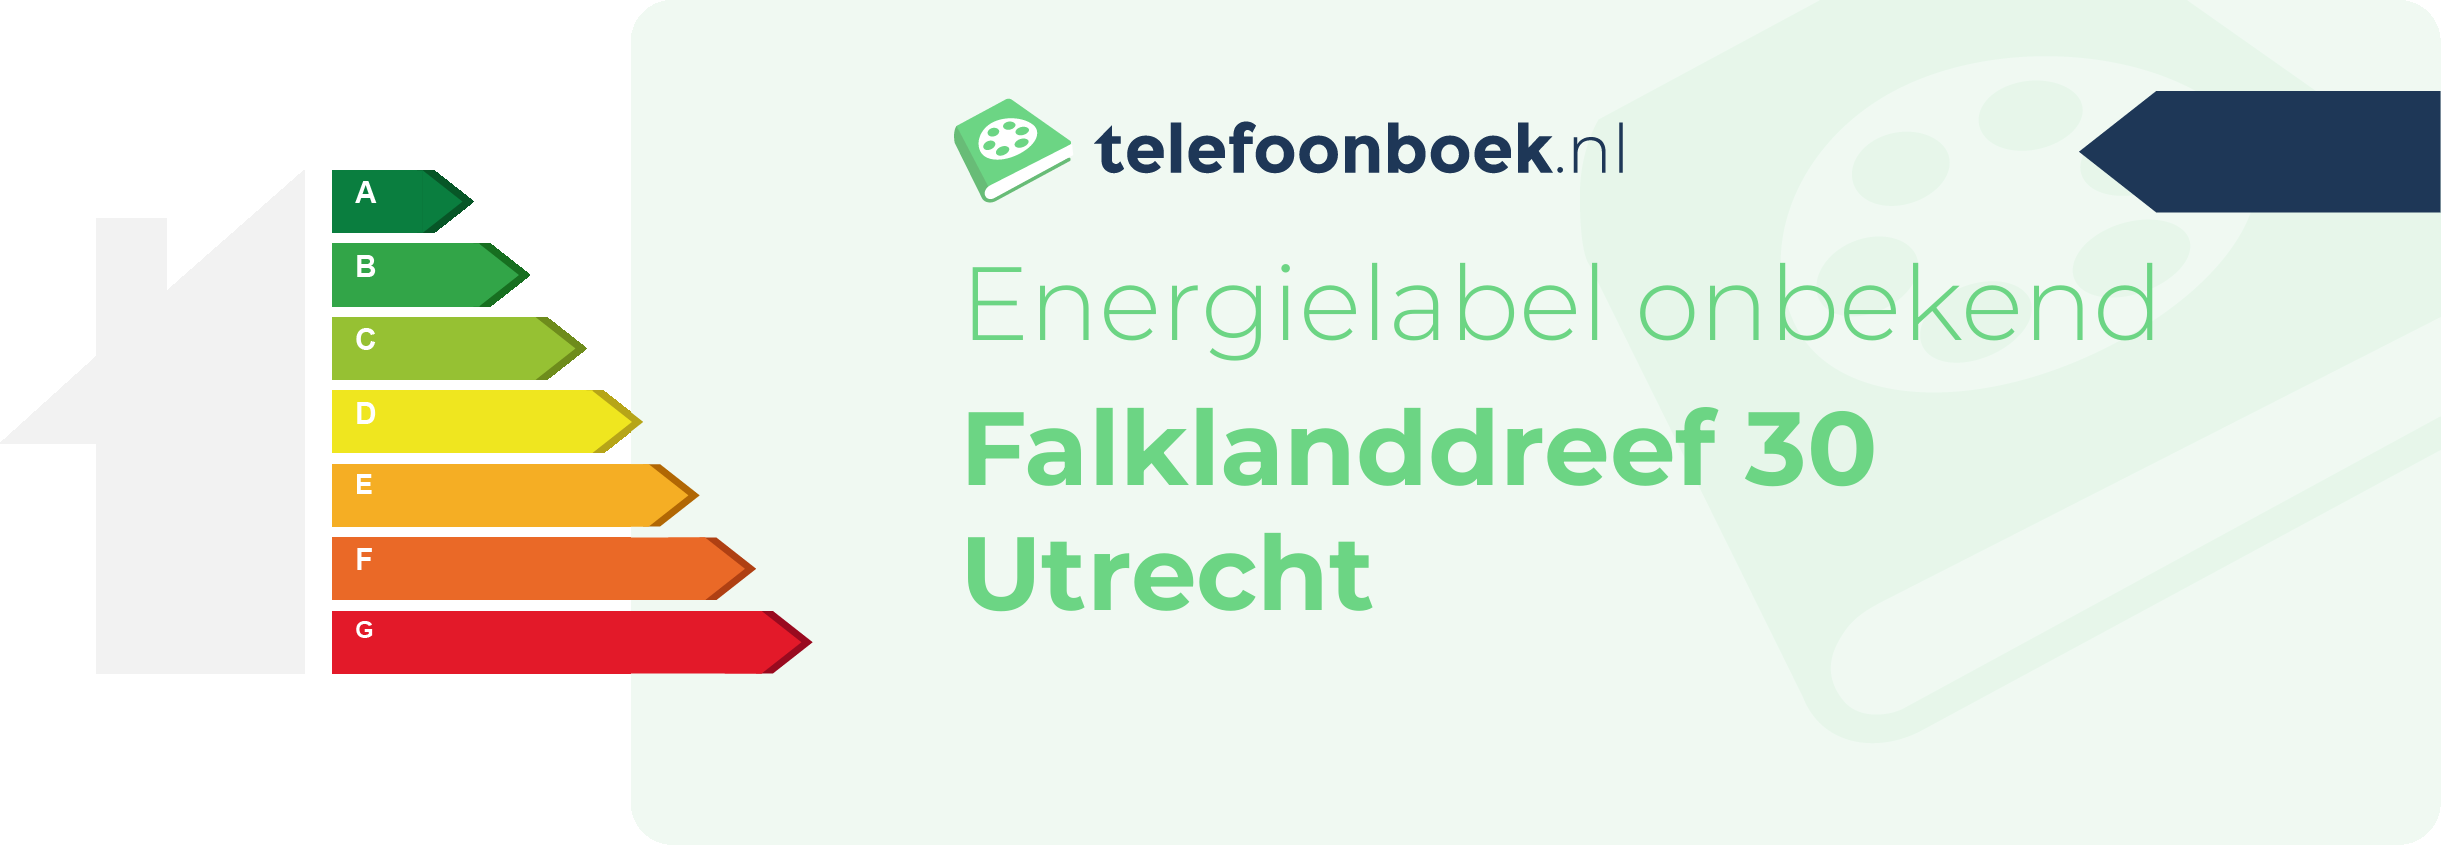 Energielabel Falklanddreef 30 Utrecht